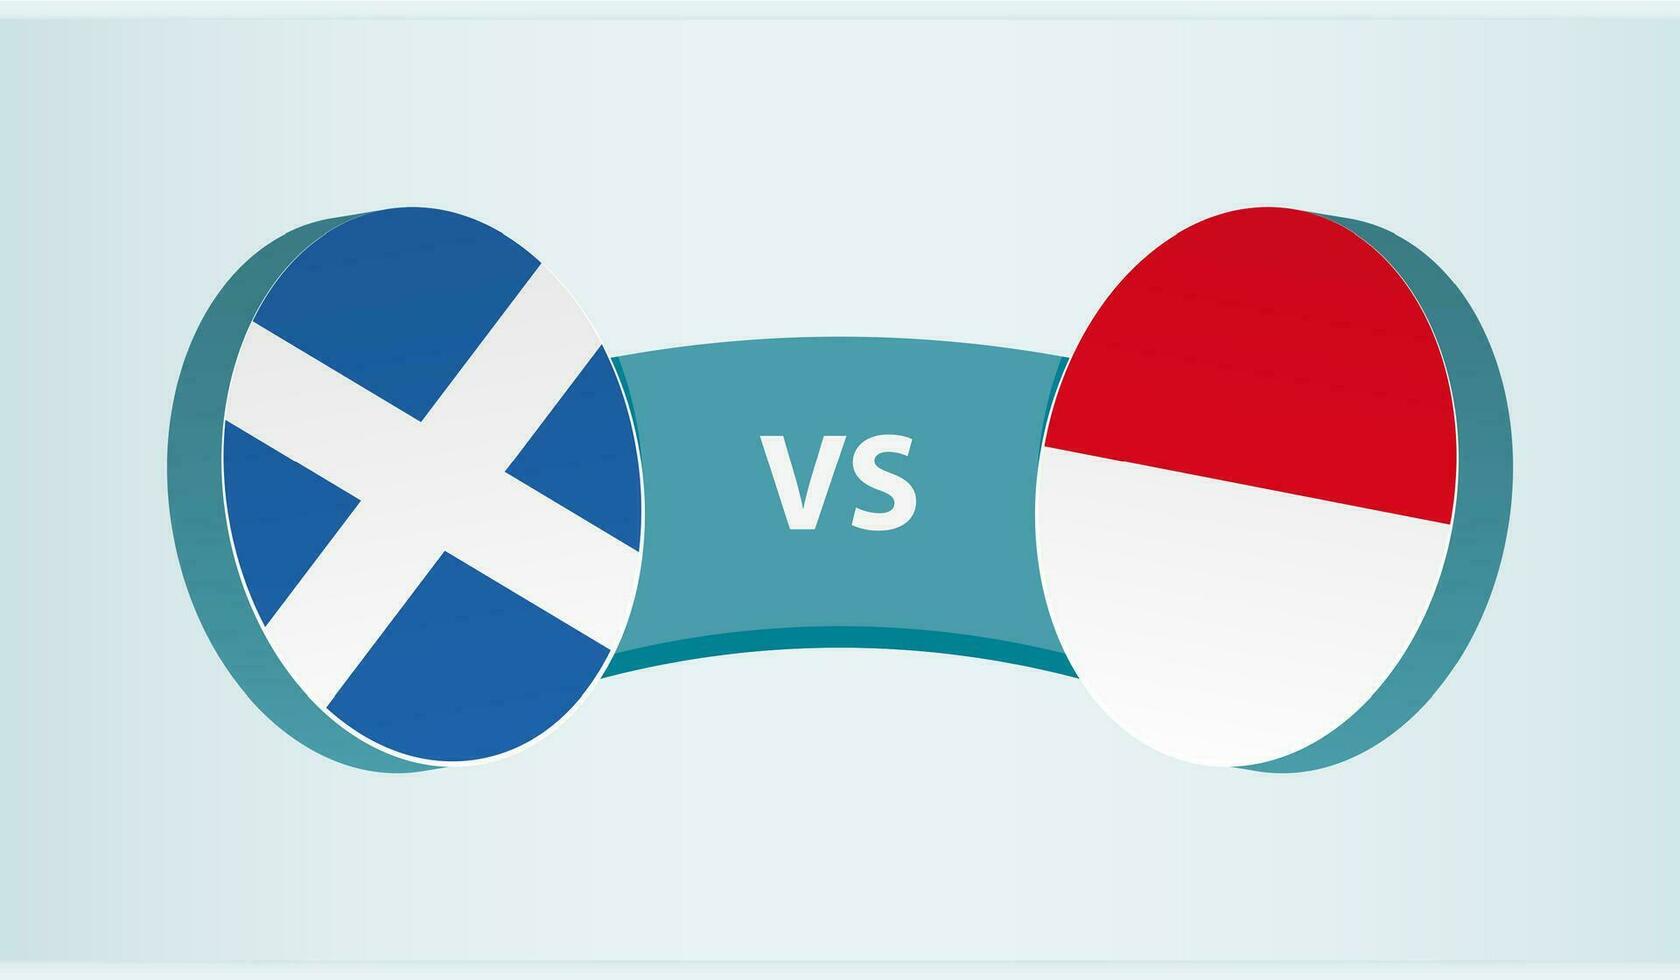 Scotland versus Indonesia, team sports competition concept. vector